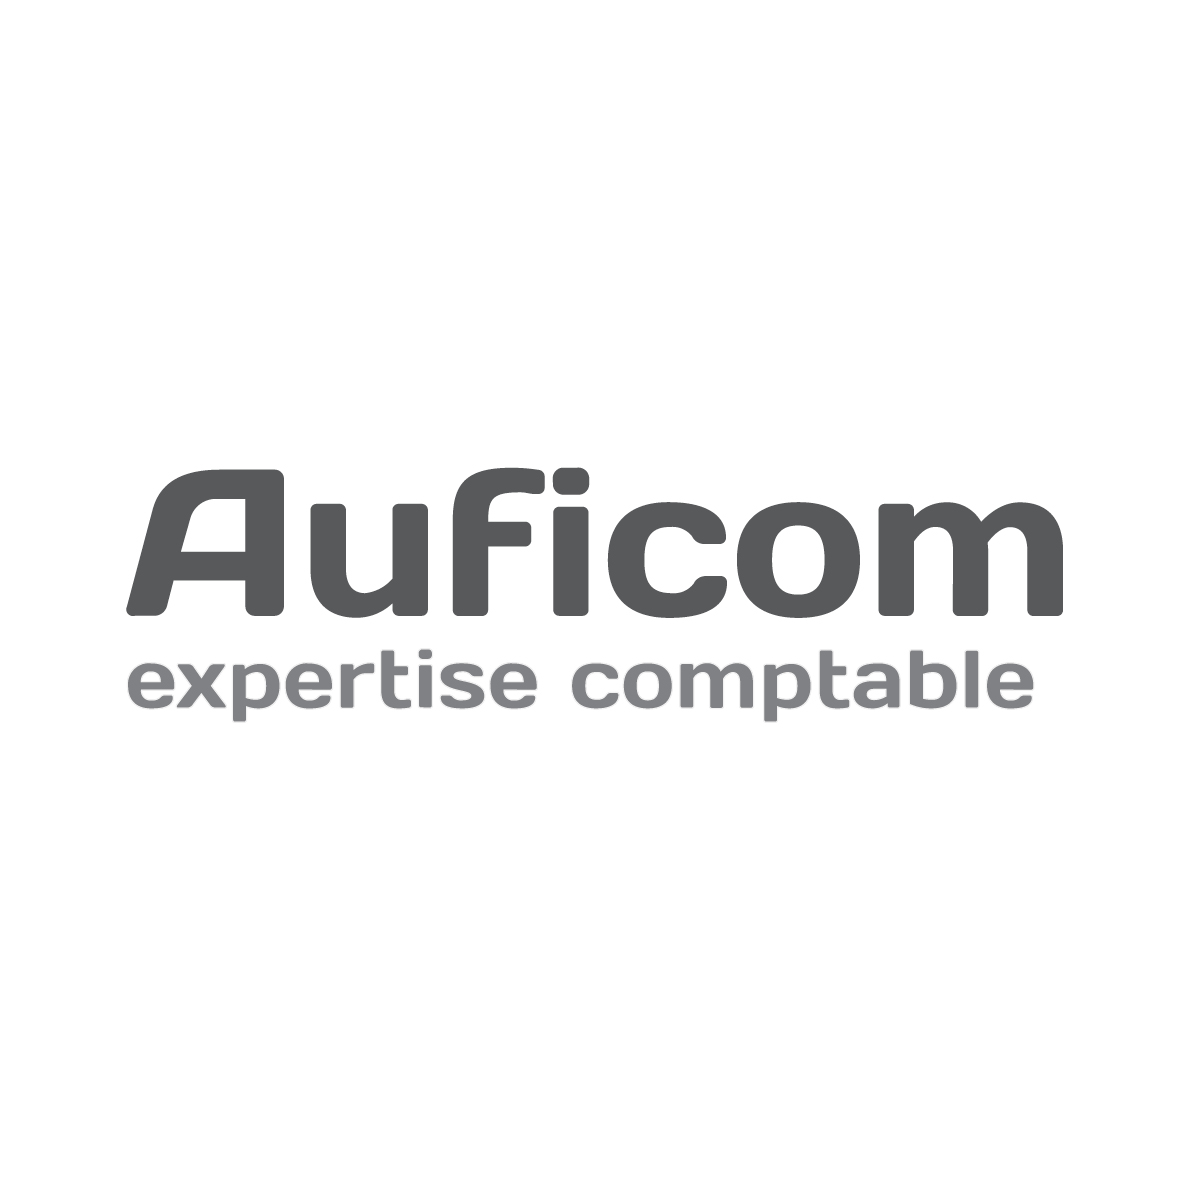 Auficom - expertise comptable